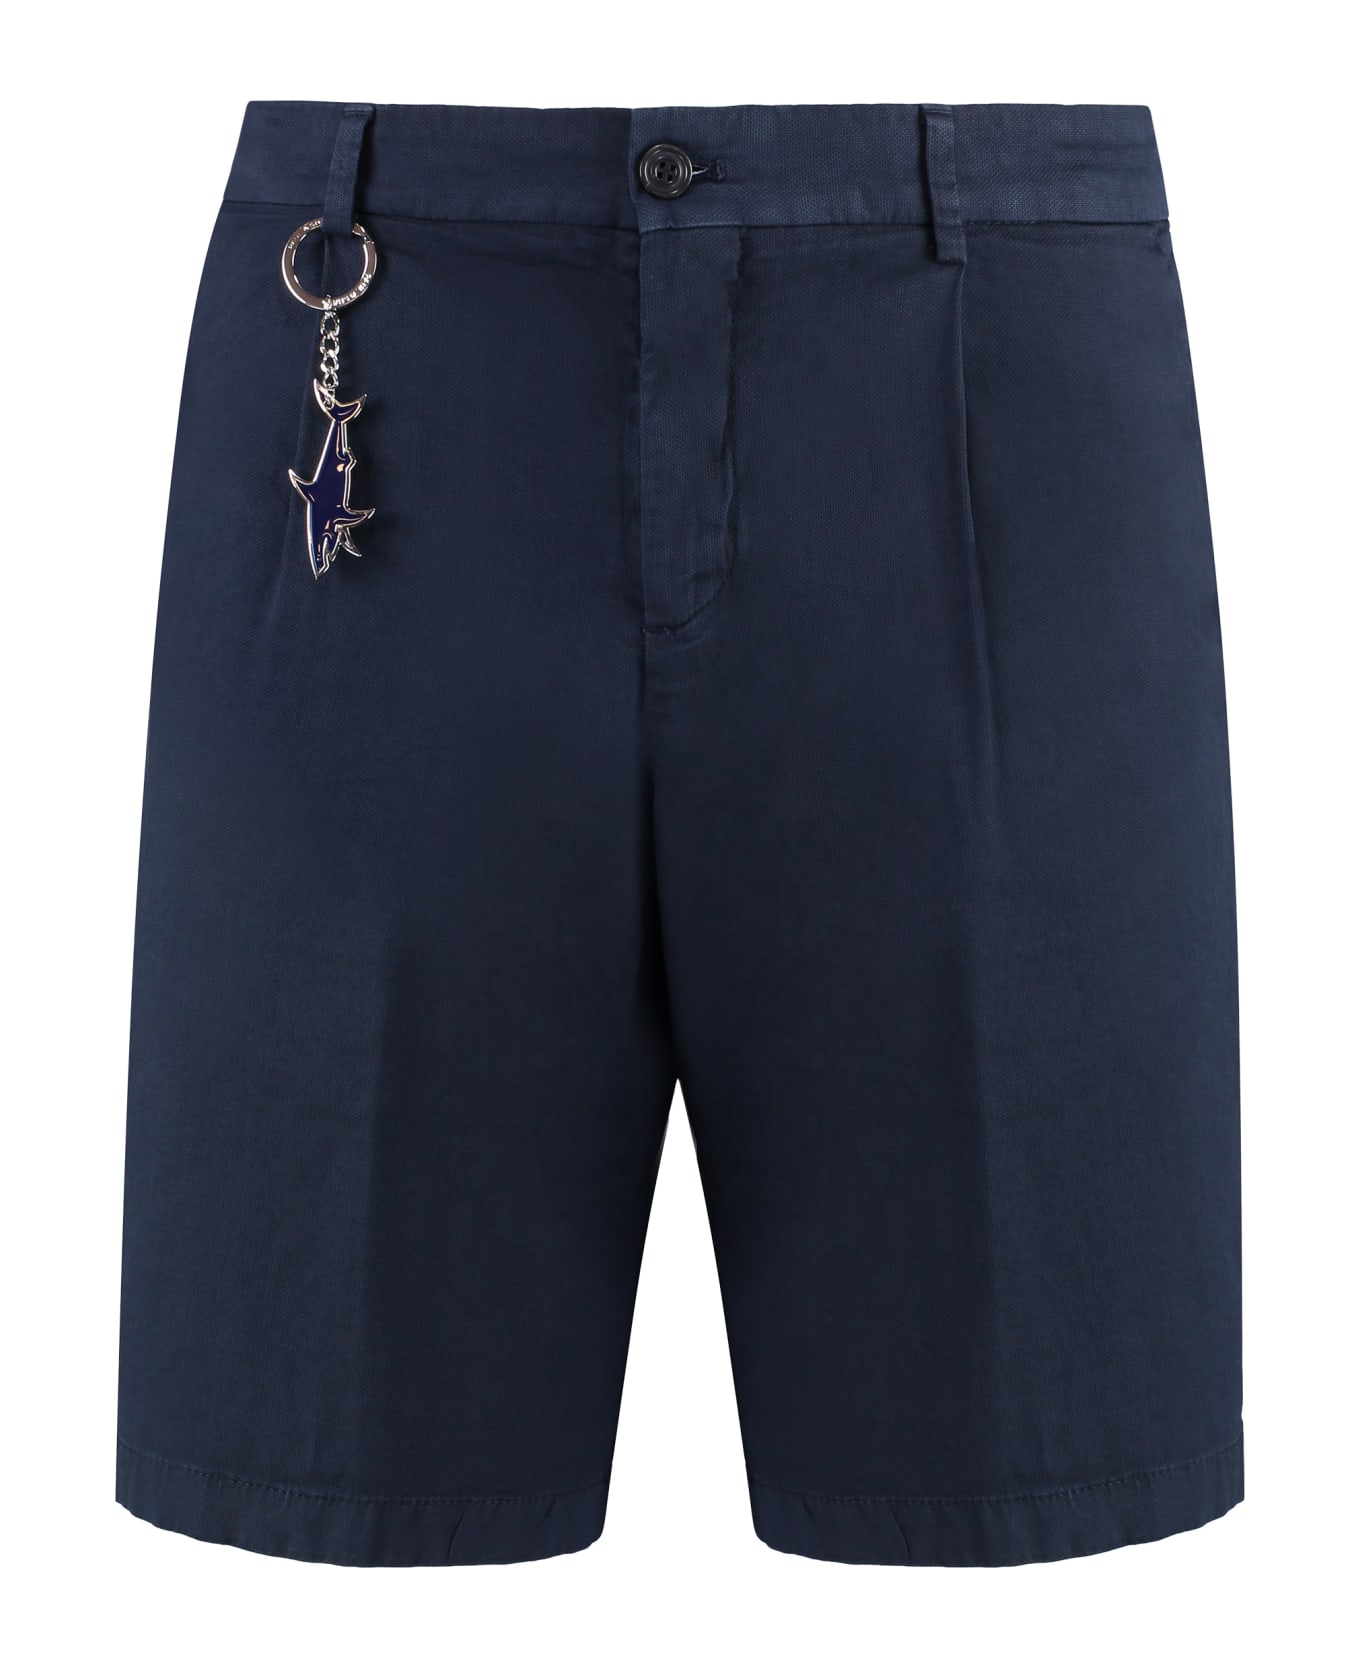 Paul&Shark Cotton Bermuda Shorts - blue ショートパンツ